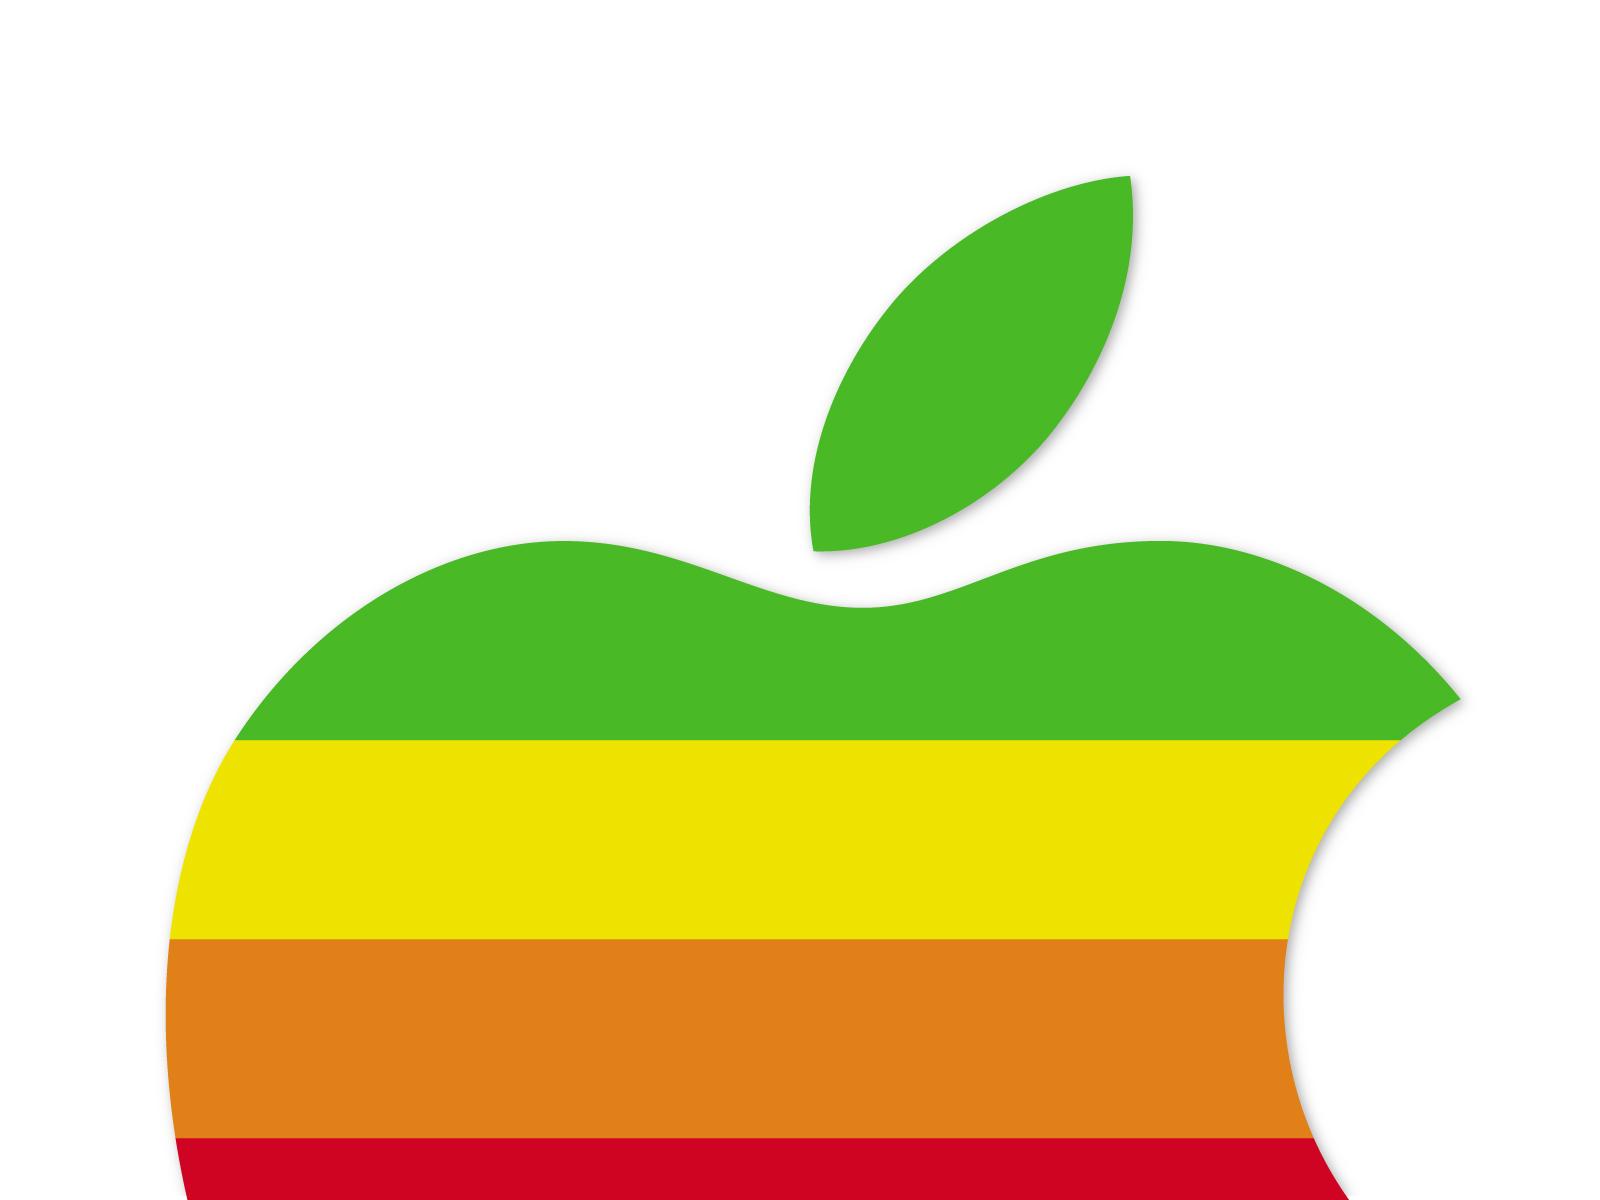 green apple fruits logo wallpaper white download